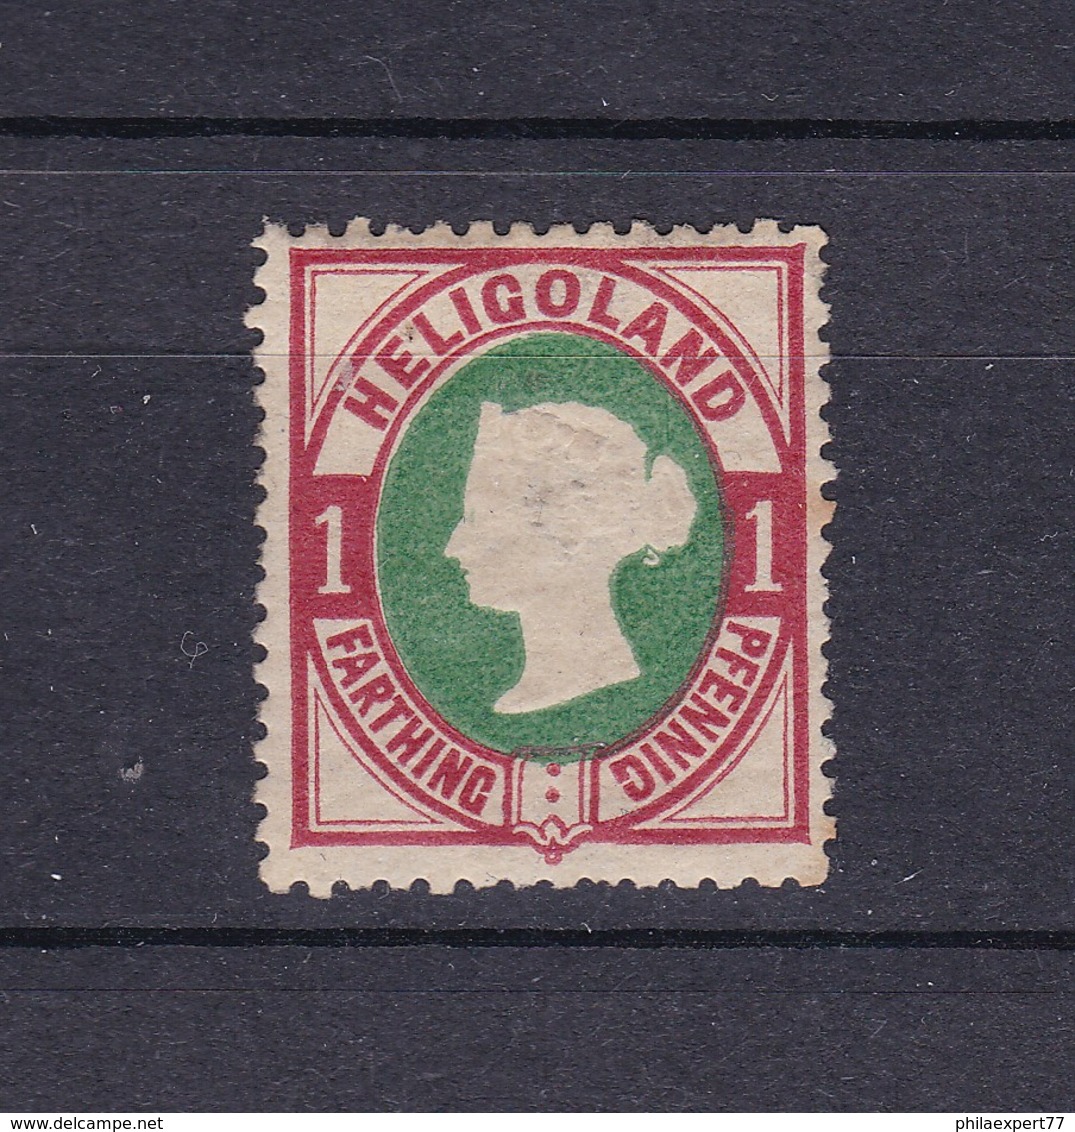 Helgoland - 1875 - Michel Nr. 11 - Helgoland